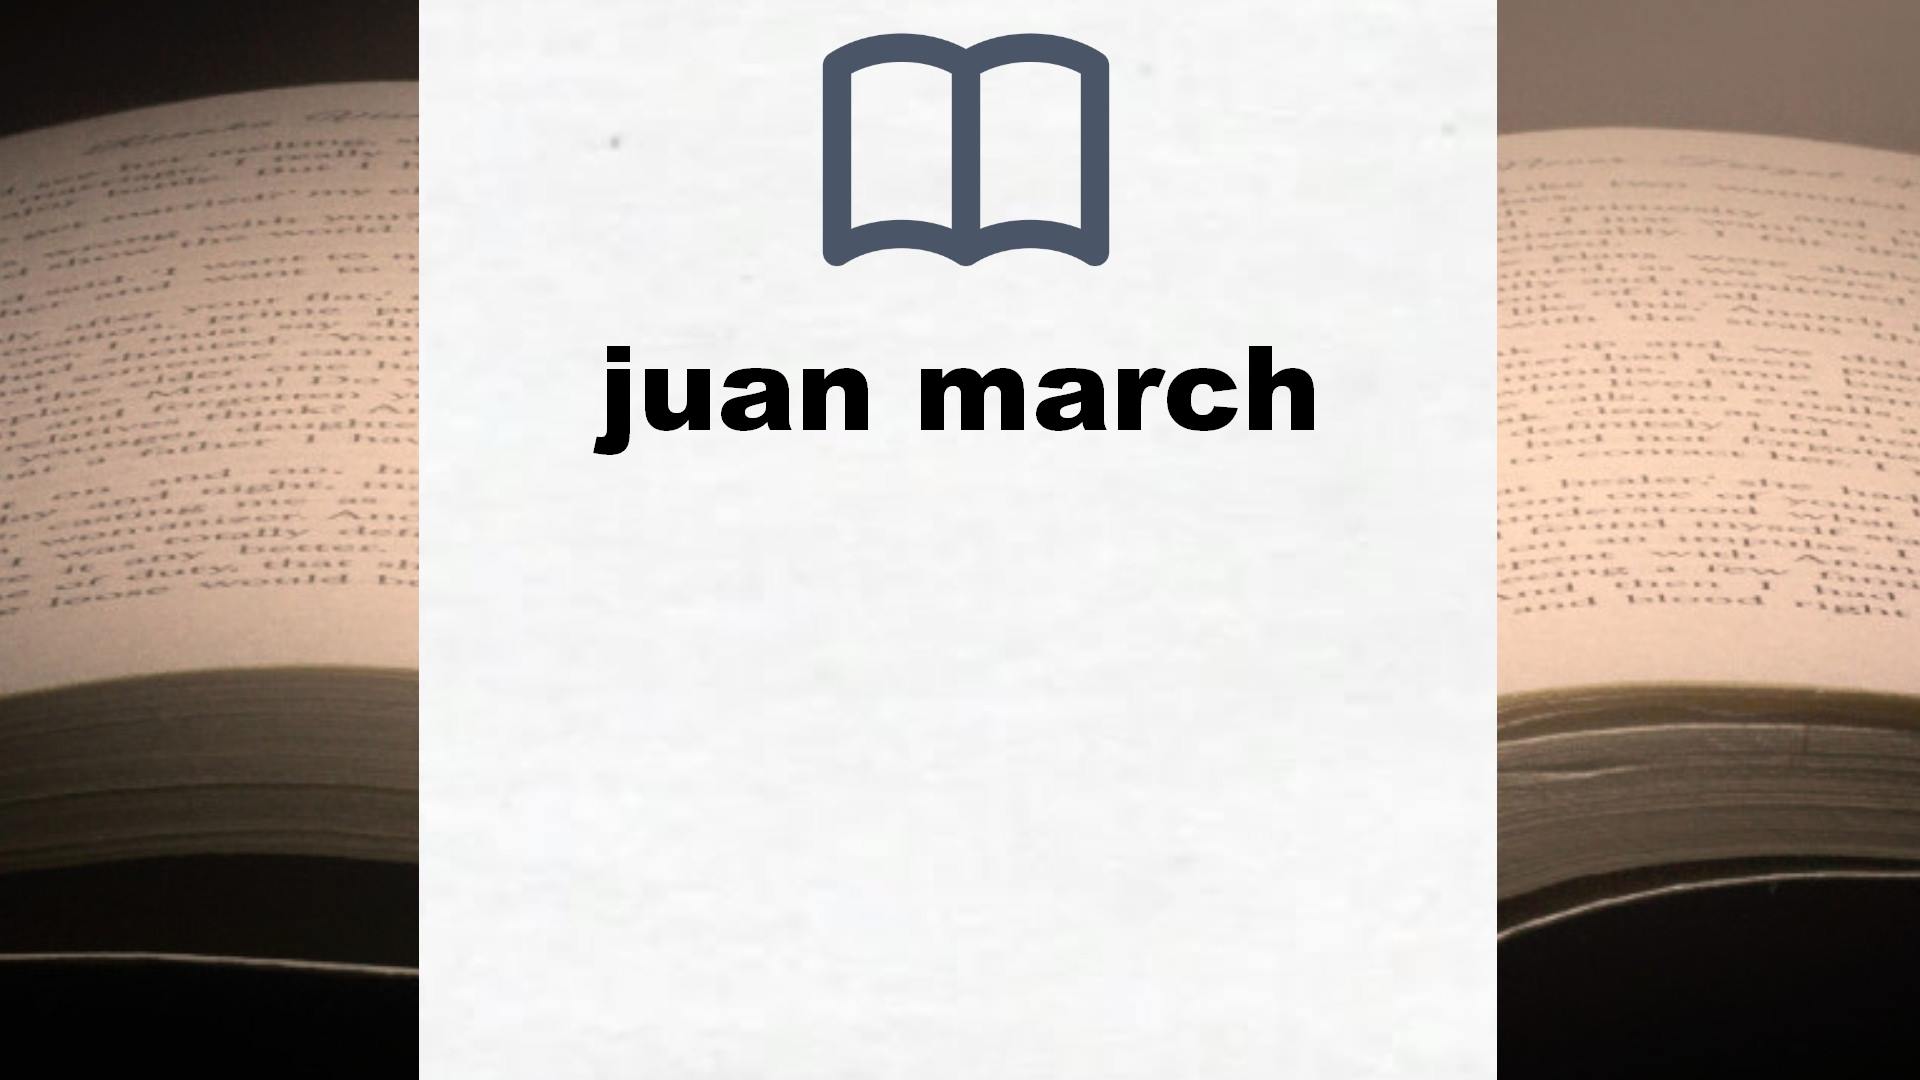 Libros sobre juan march